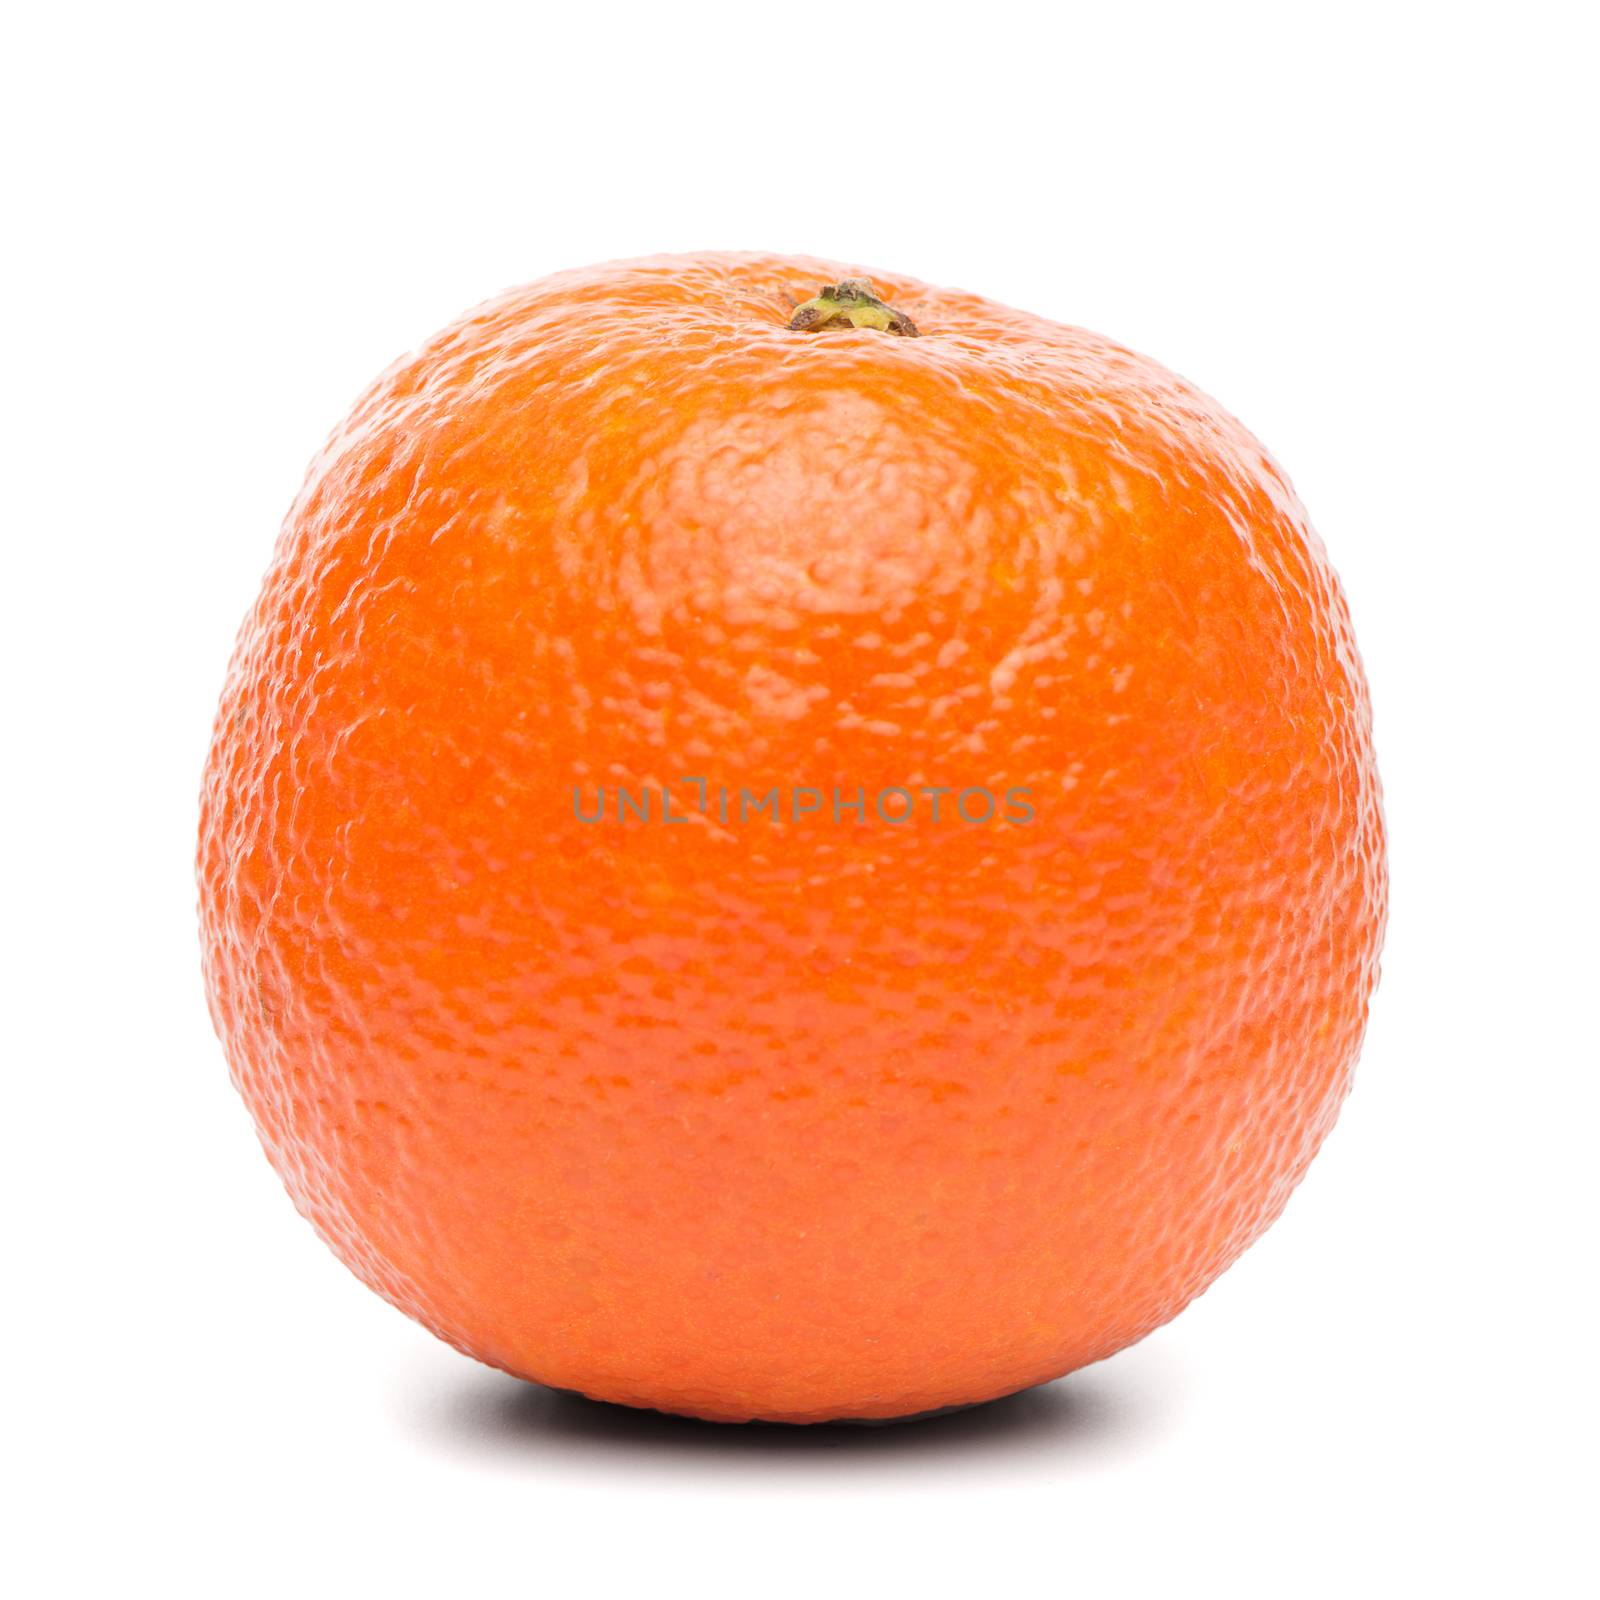 Ripe tangerine or mandarin by homydesign